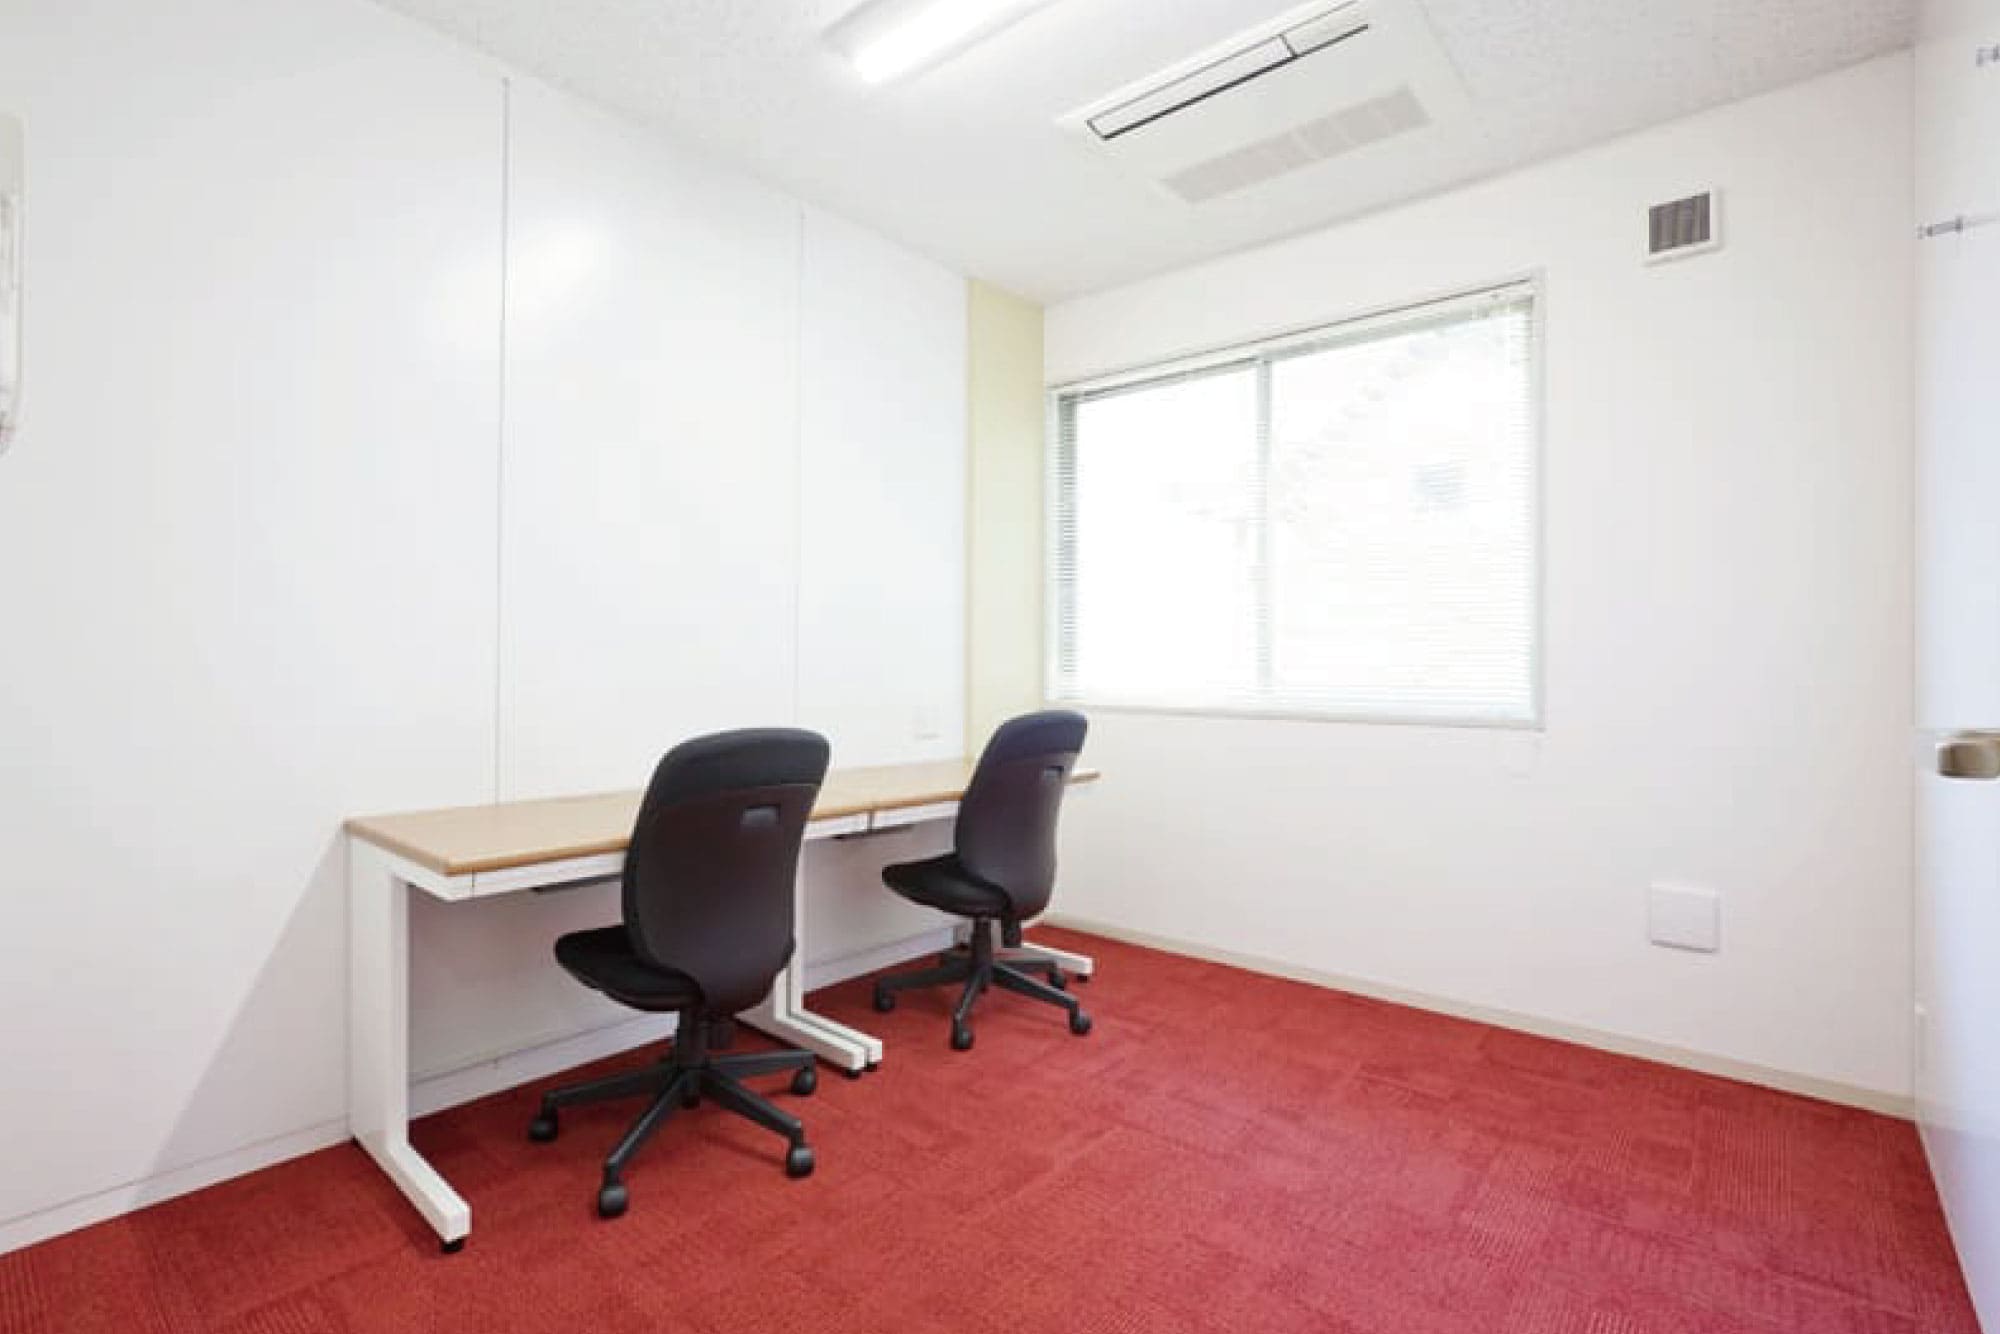 Office space for 3 to 5 person with window - TENSHO OFFICE Ikebukuro Nishiguchi